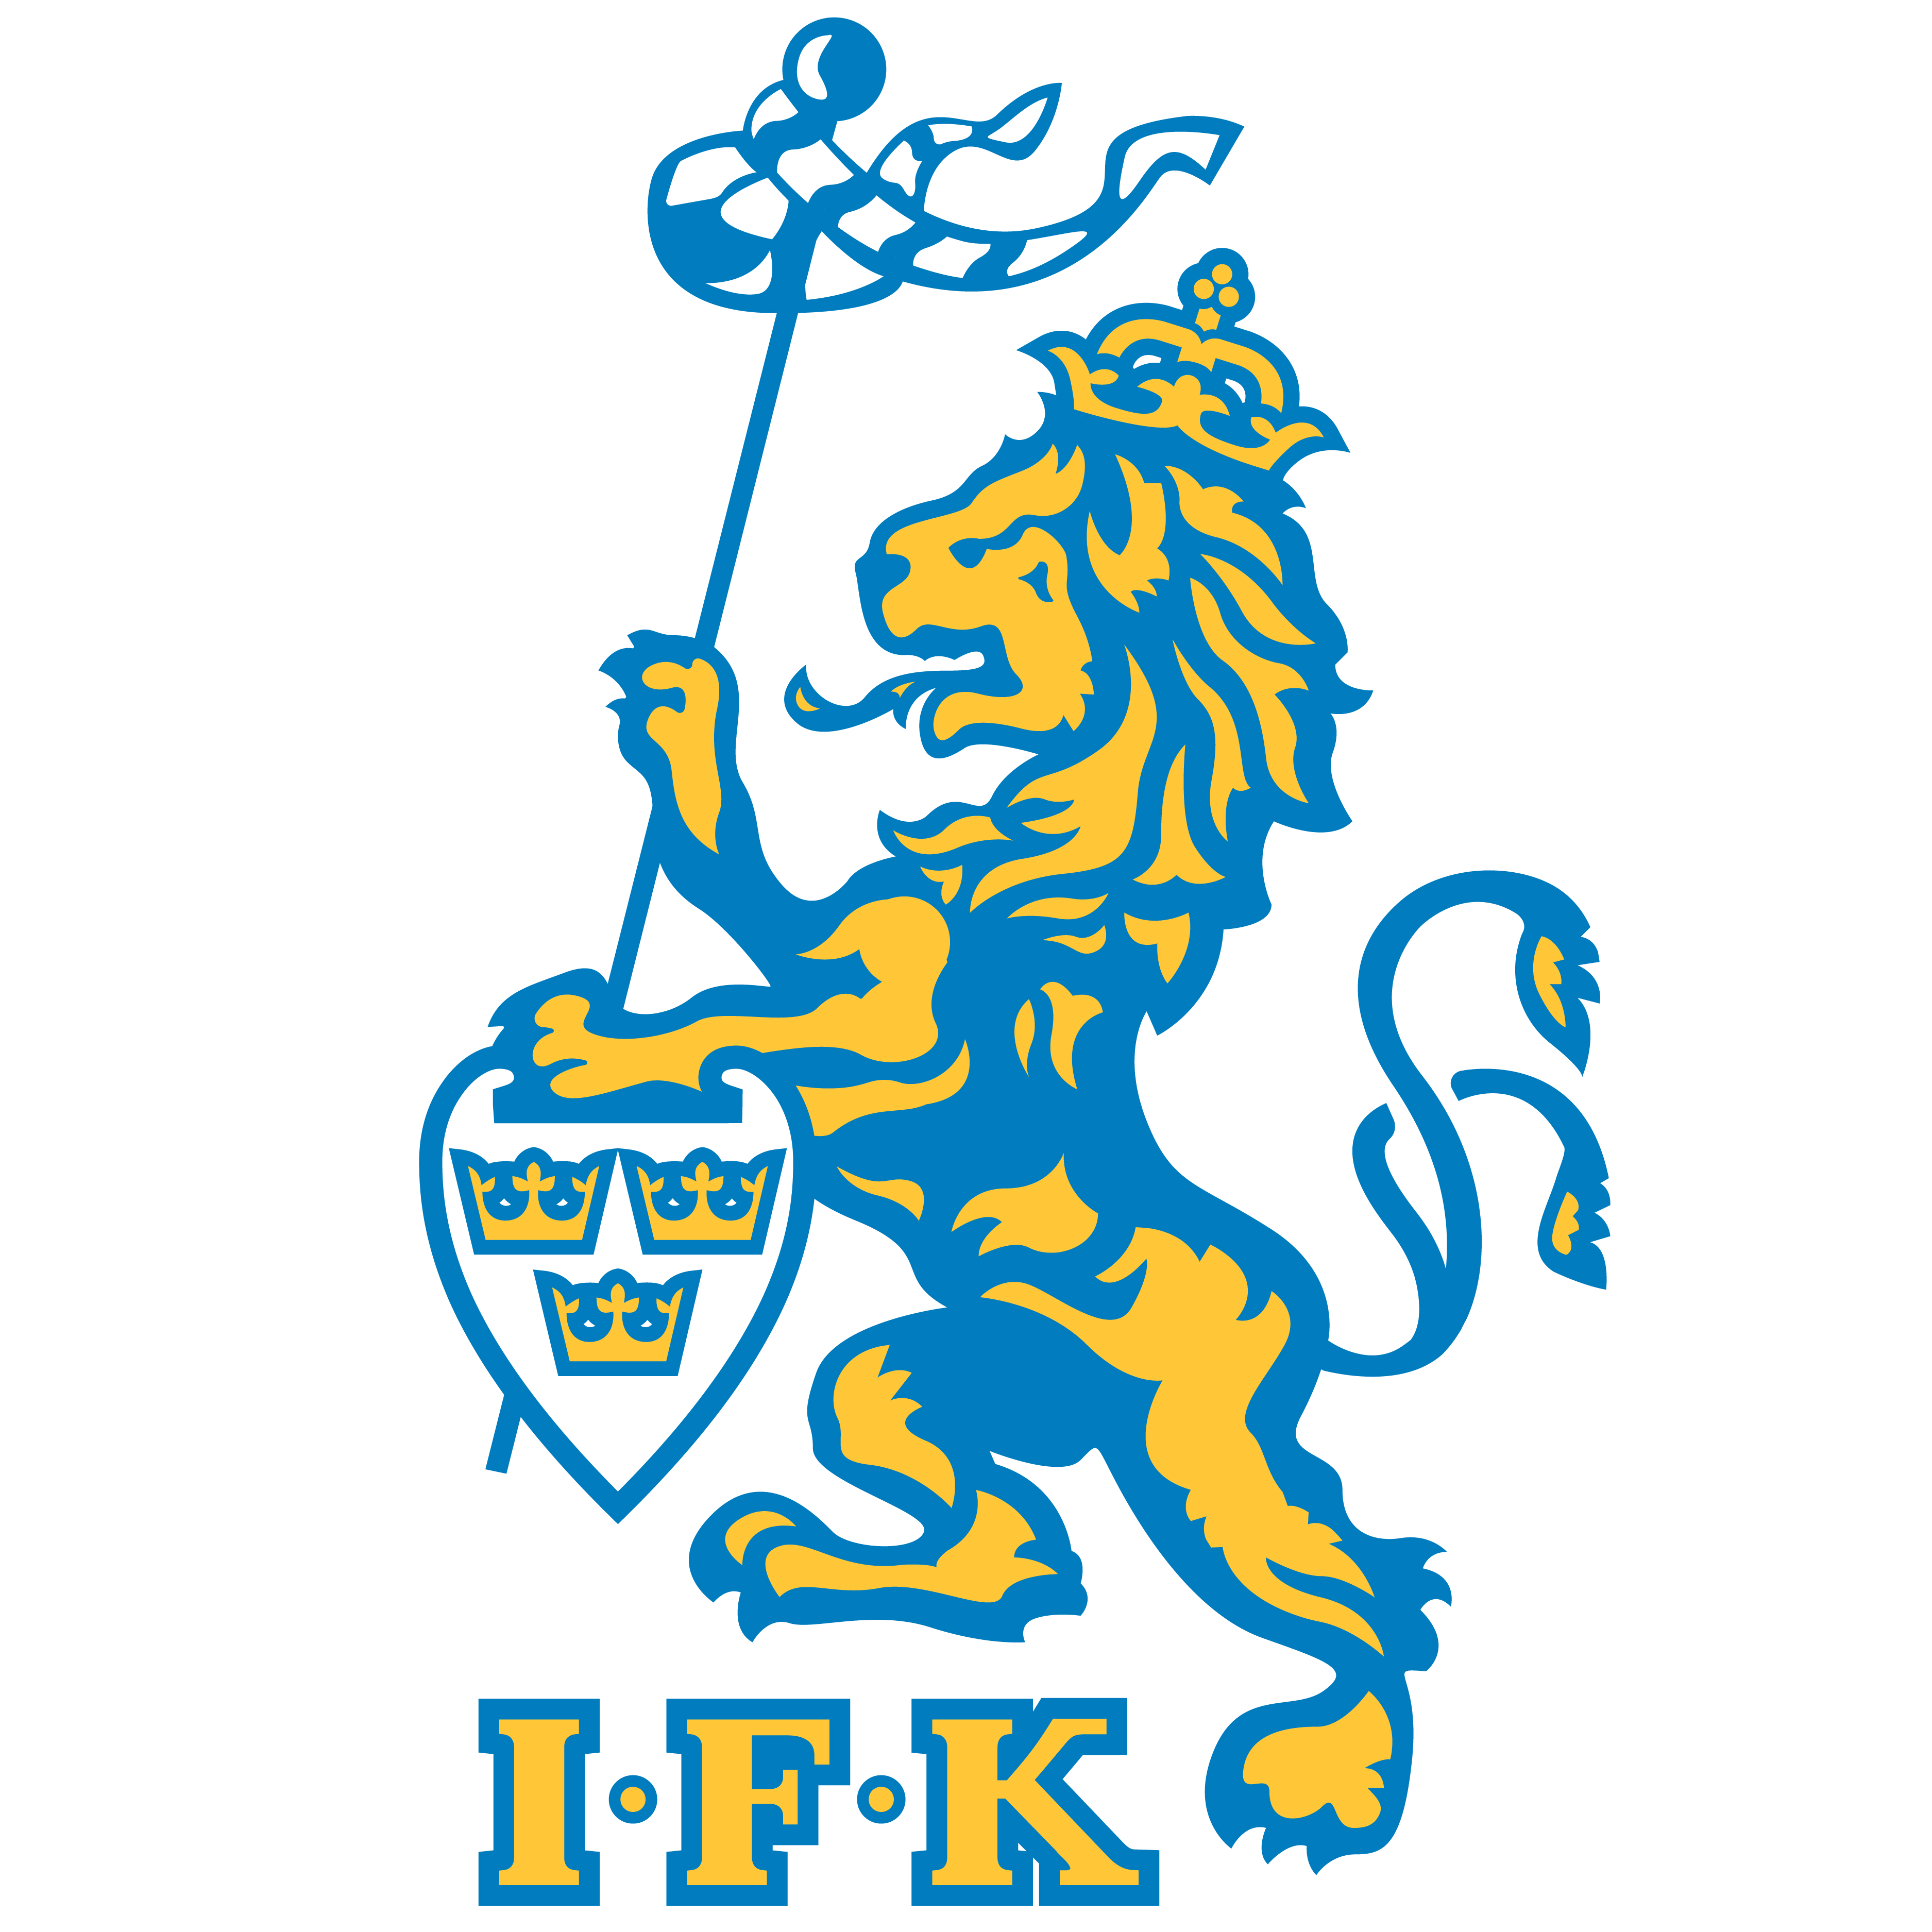 IFK Goteborg Heraldic logo design by logo designer Blue Deer Design for your inspiration and for the worlds largest logo competition